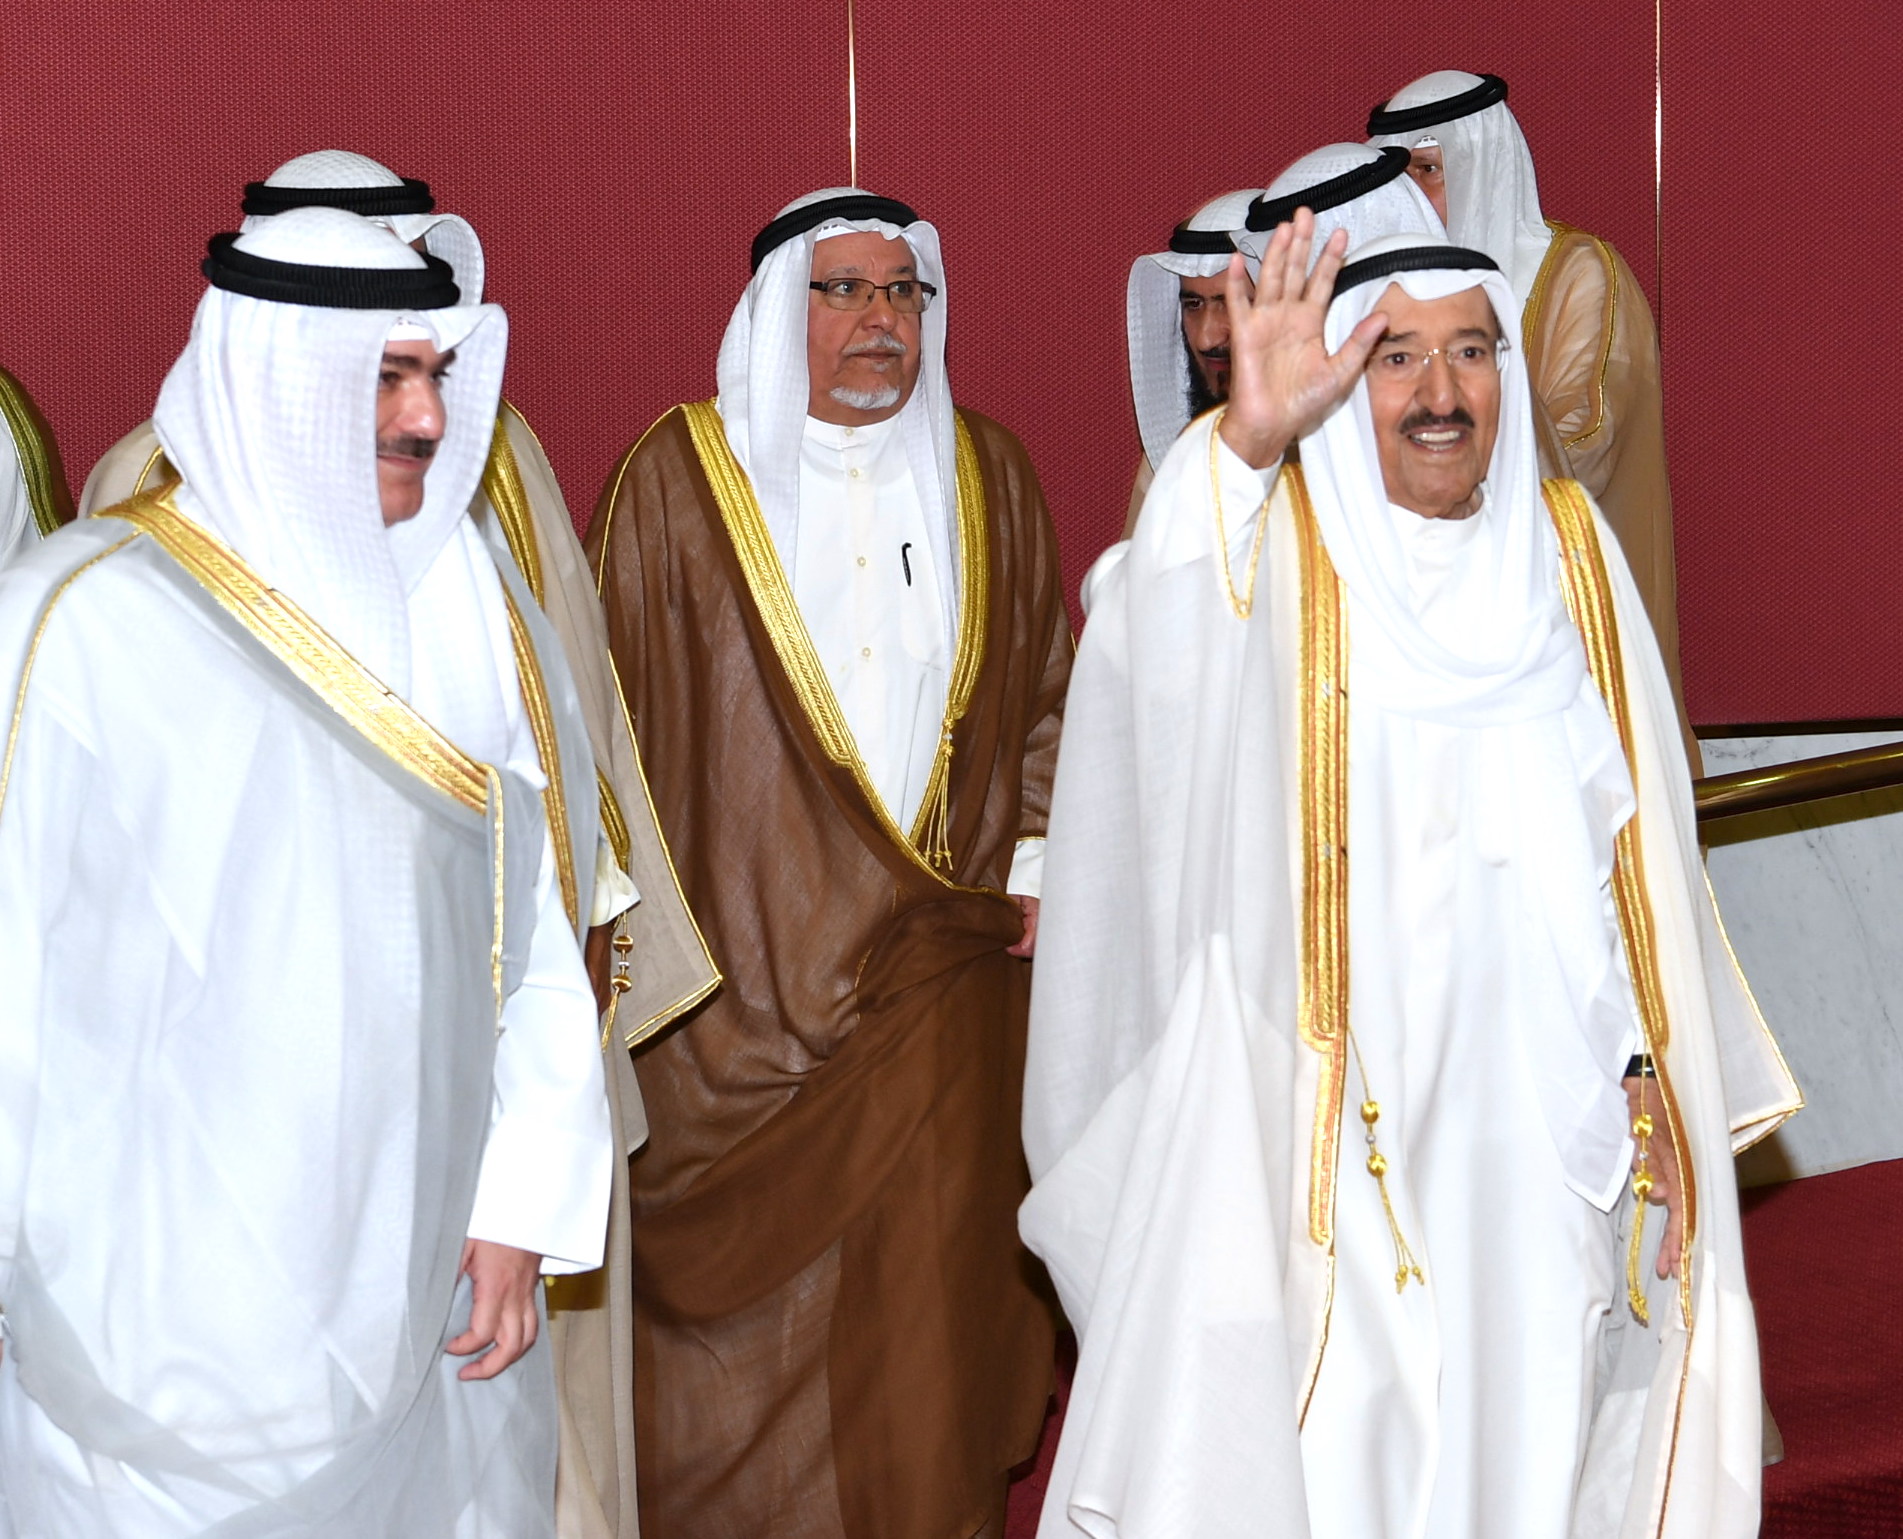 His Highness the Amir Sheikh Sabah Al-Ahmad Al-Jaber Al-Sabah arrives to attend Kuwait's 10th International Award for Memorizing the Quran